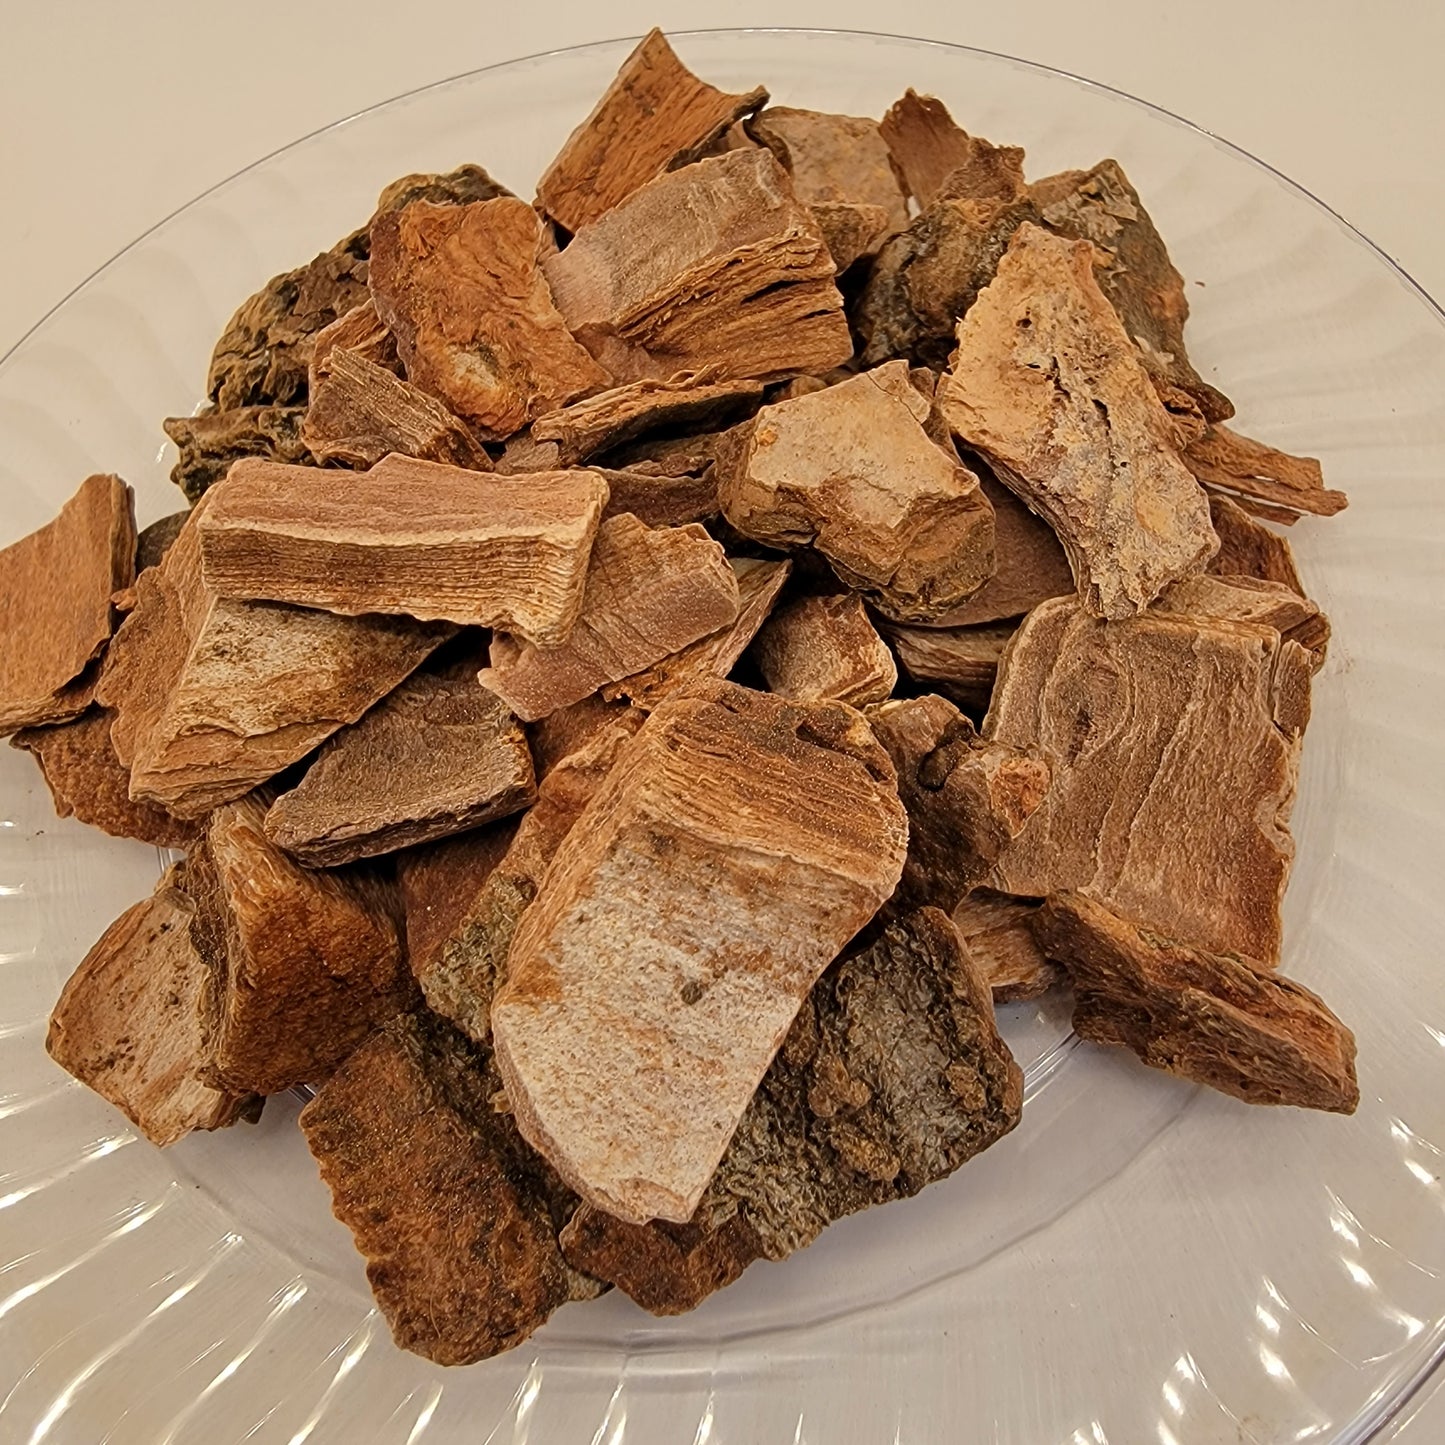 Cuachalalate herb hardwood chip , Amphipetyglum Adstringens